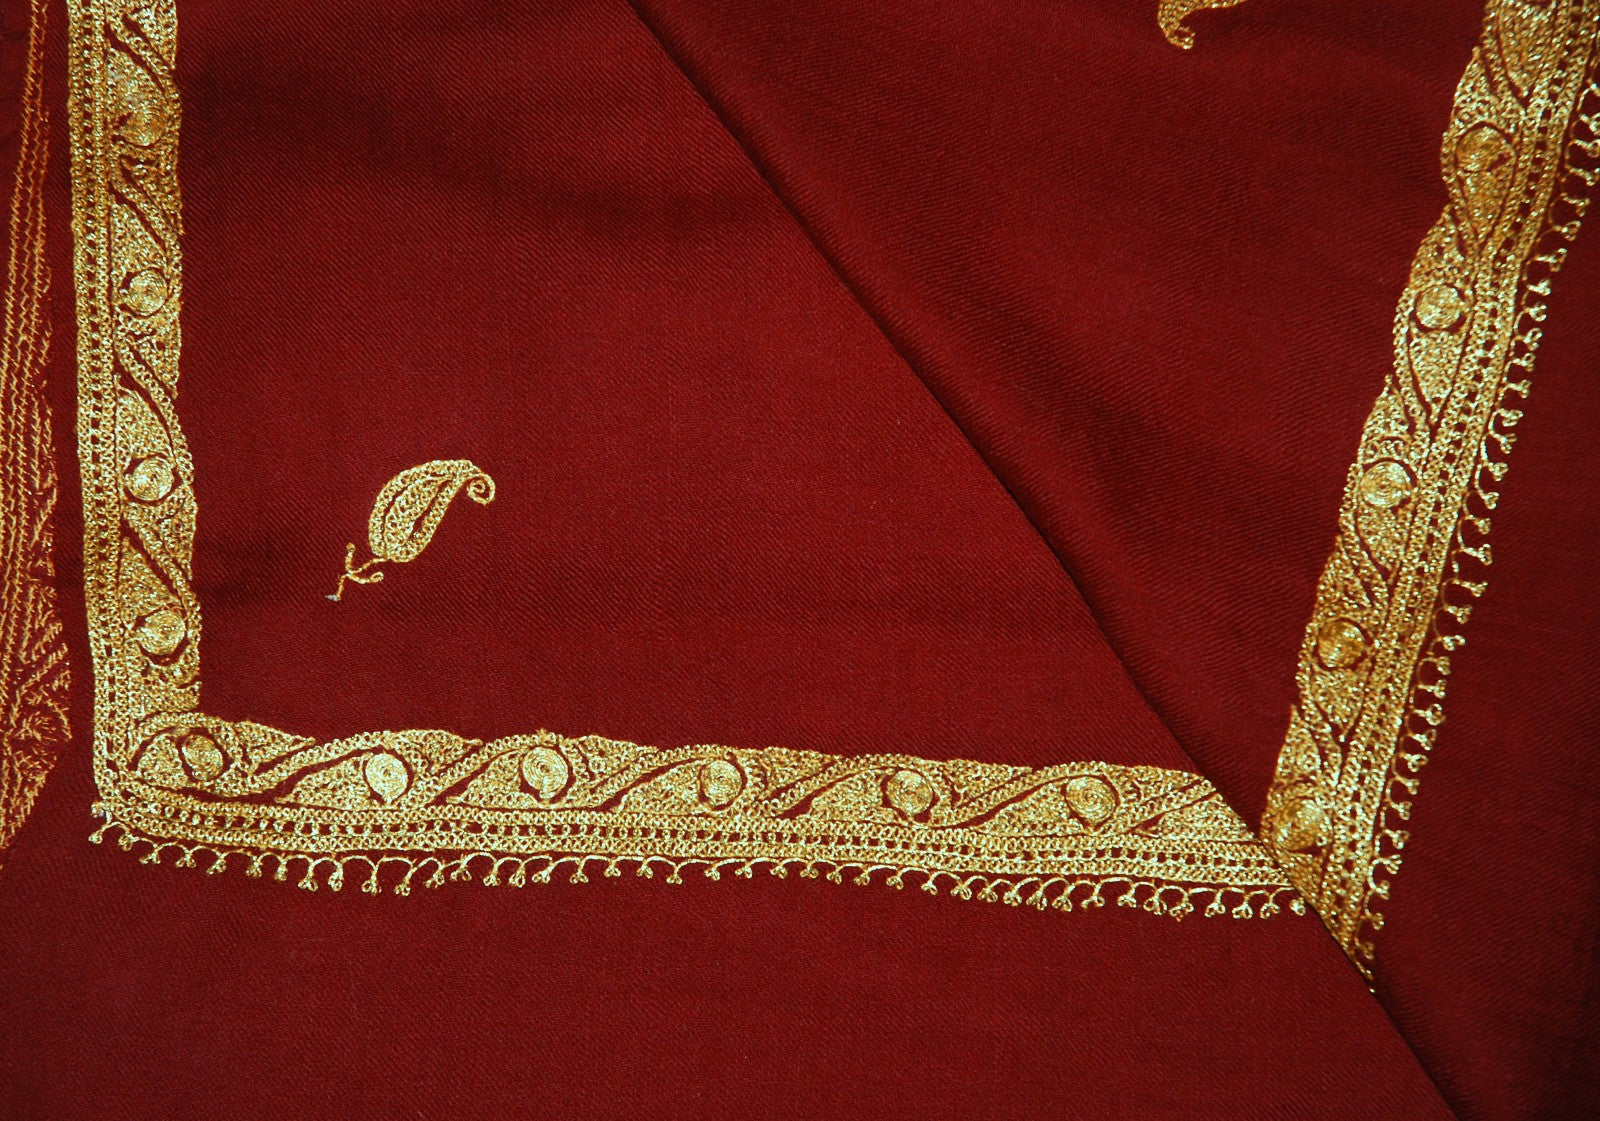 Embroidered Wool Shawl Maroon, Gold "Tilla" Sozni Embroidery #WS-922